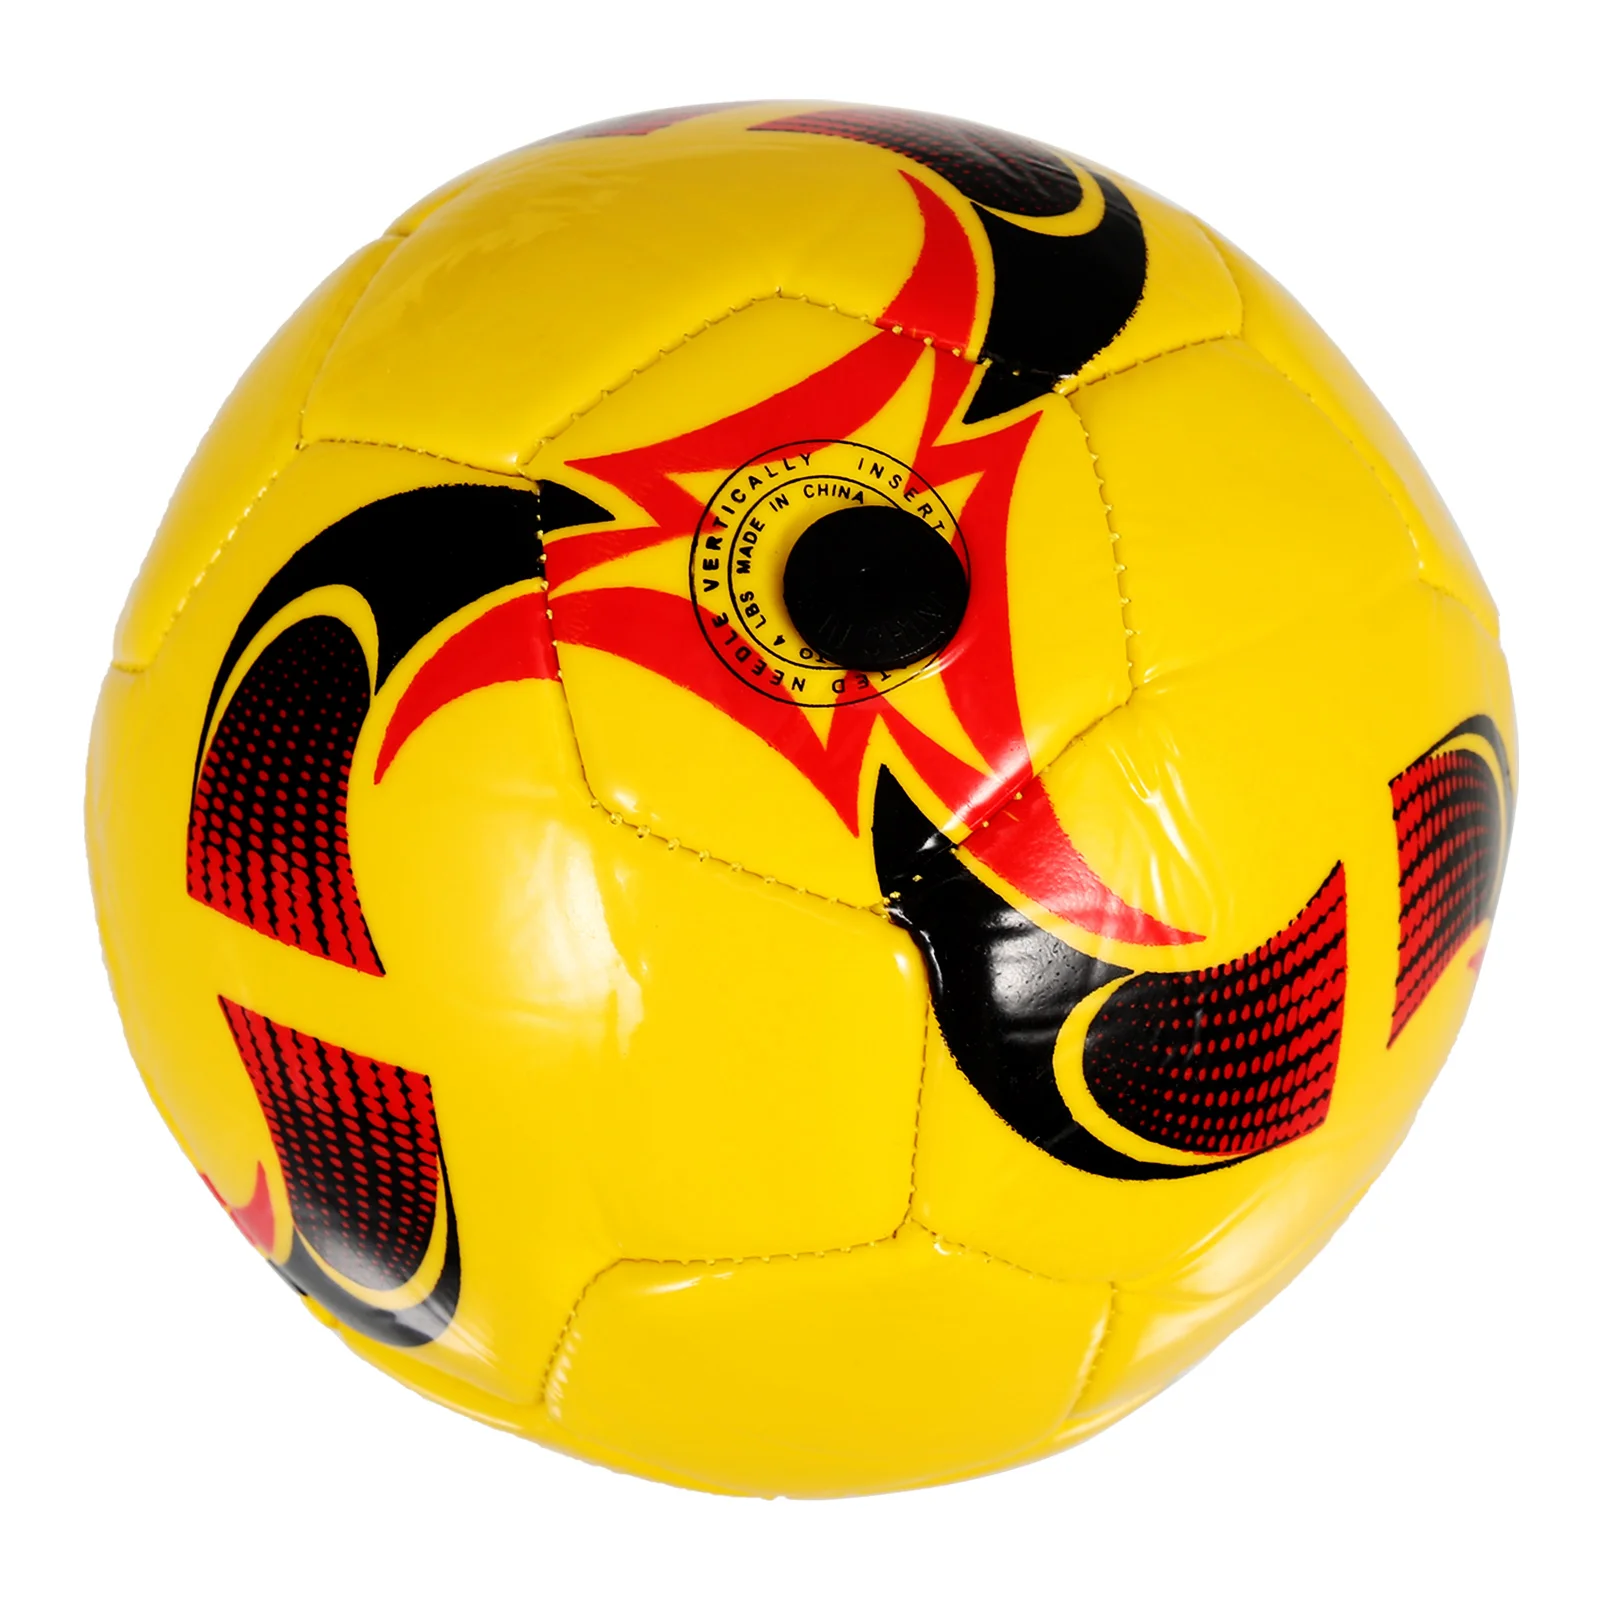 Soccer 15cm Kids Sports Soccer Balls Colorful Playground Balls Football Sports Play Balls Favor, (Random Style)